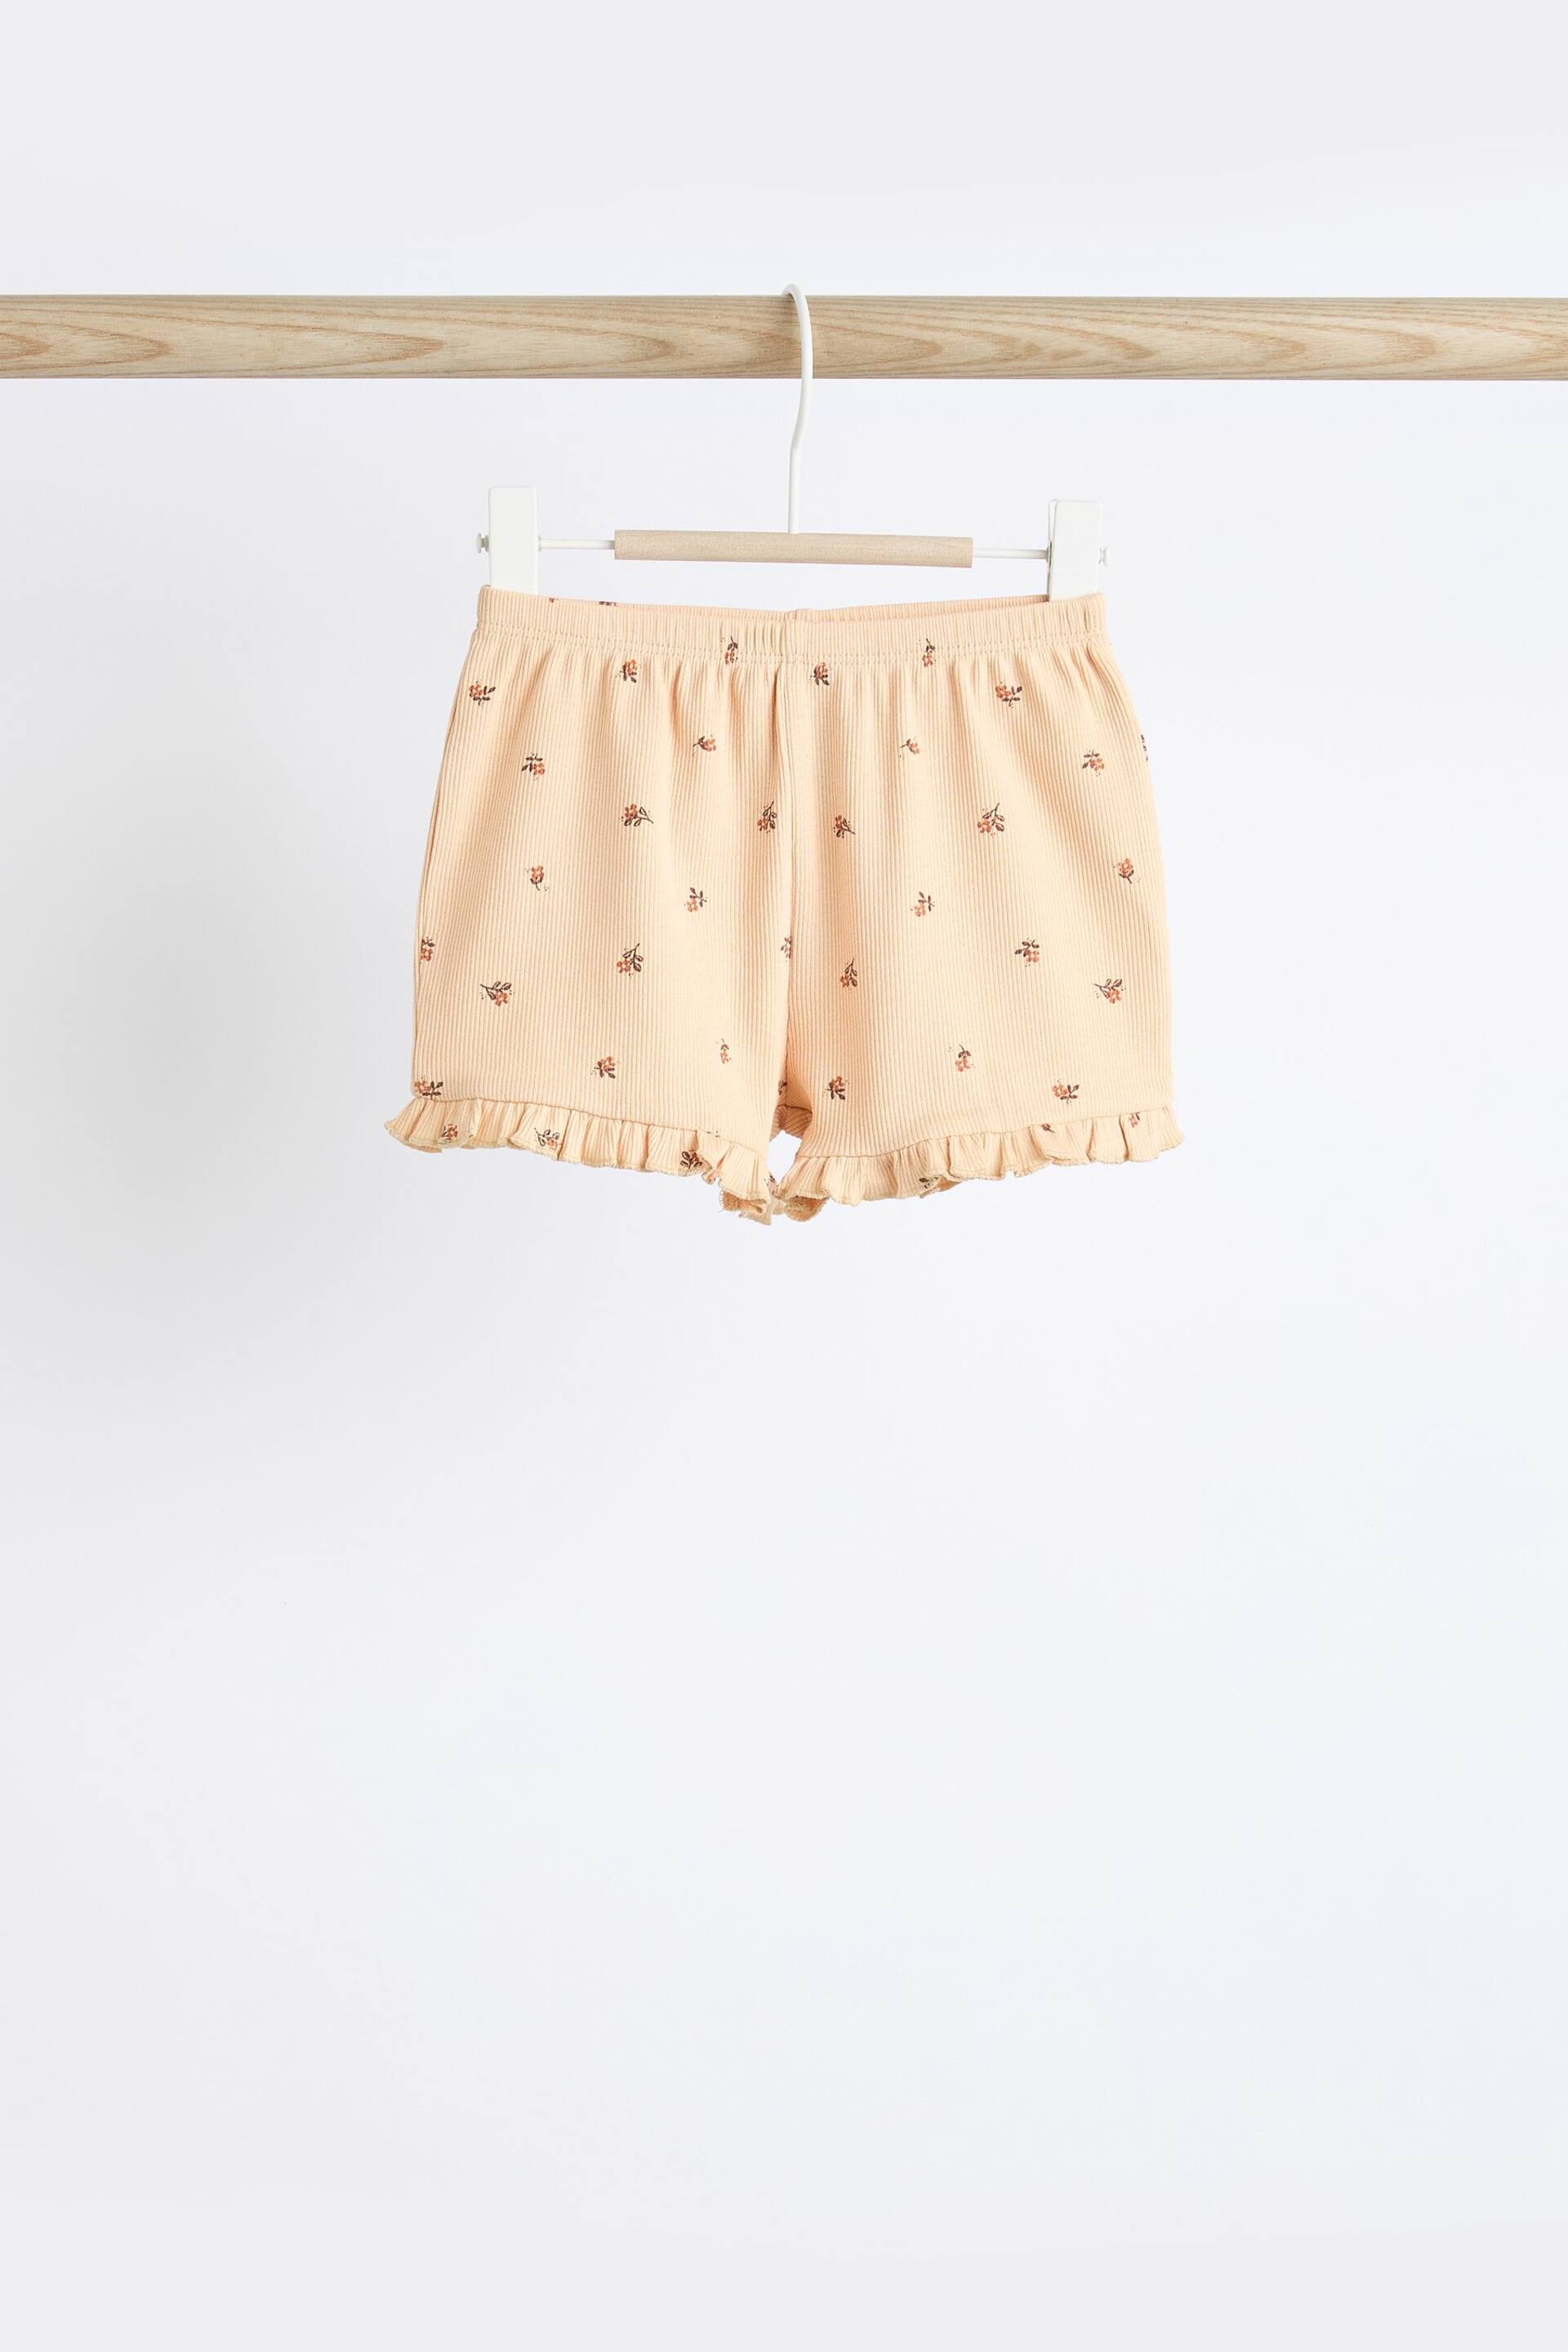 Beige/Cream Baby Shorts 3 Pack - Image 5 of 9